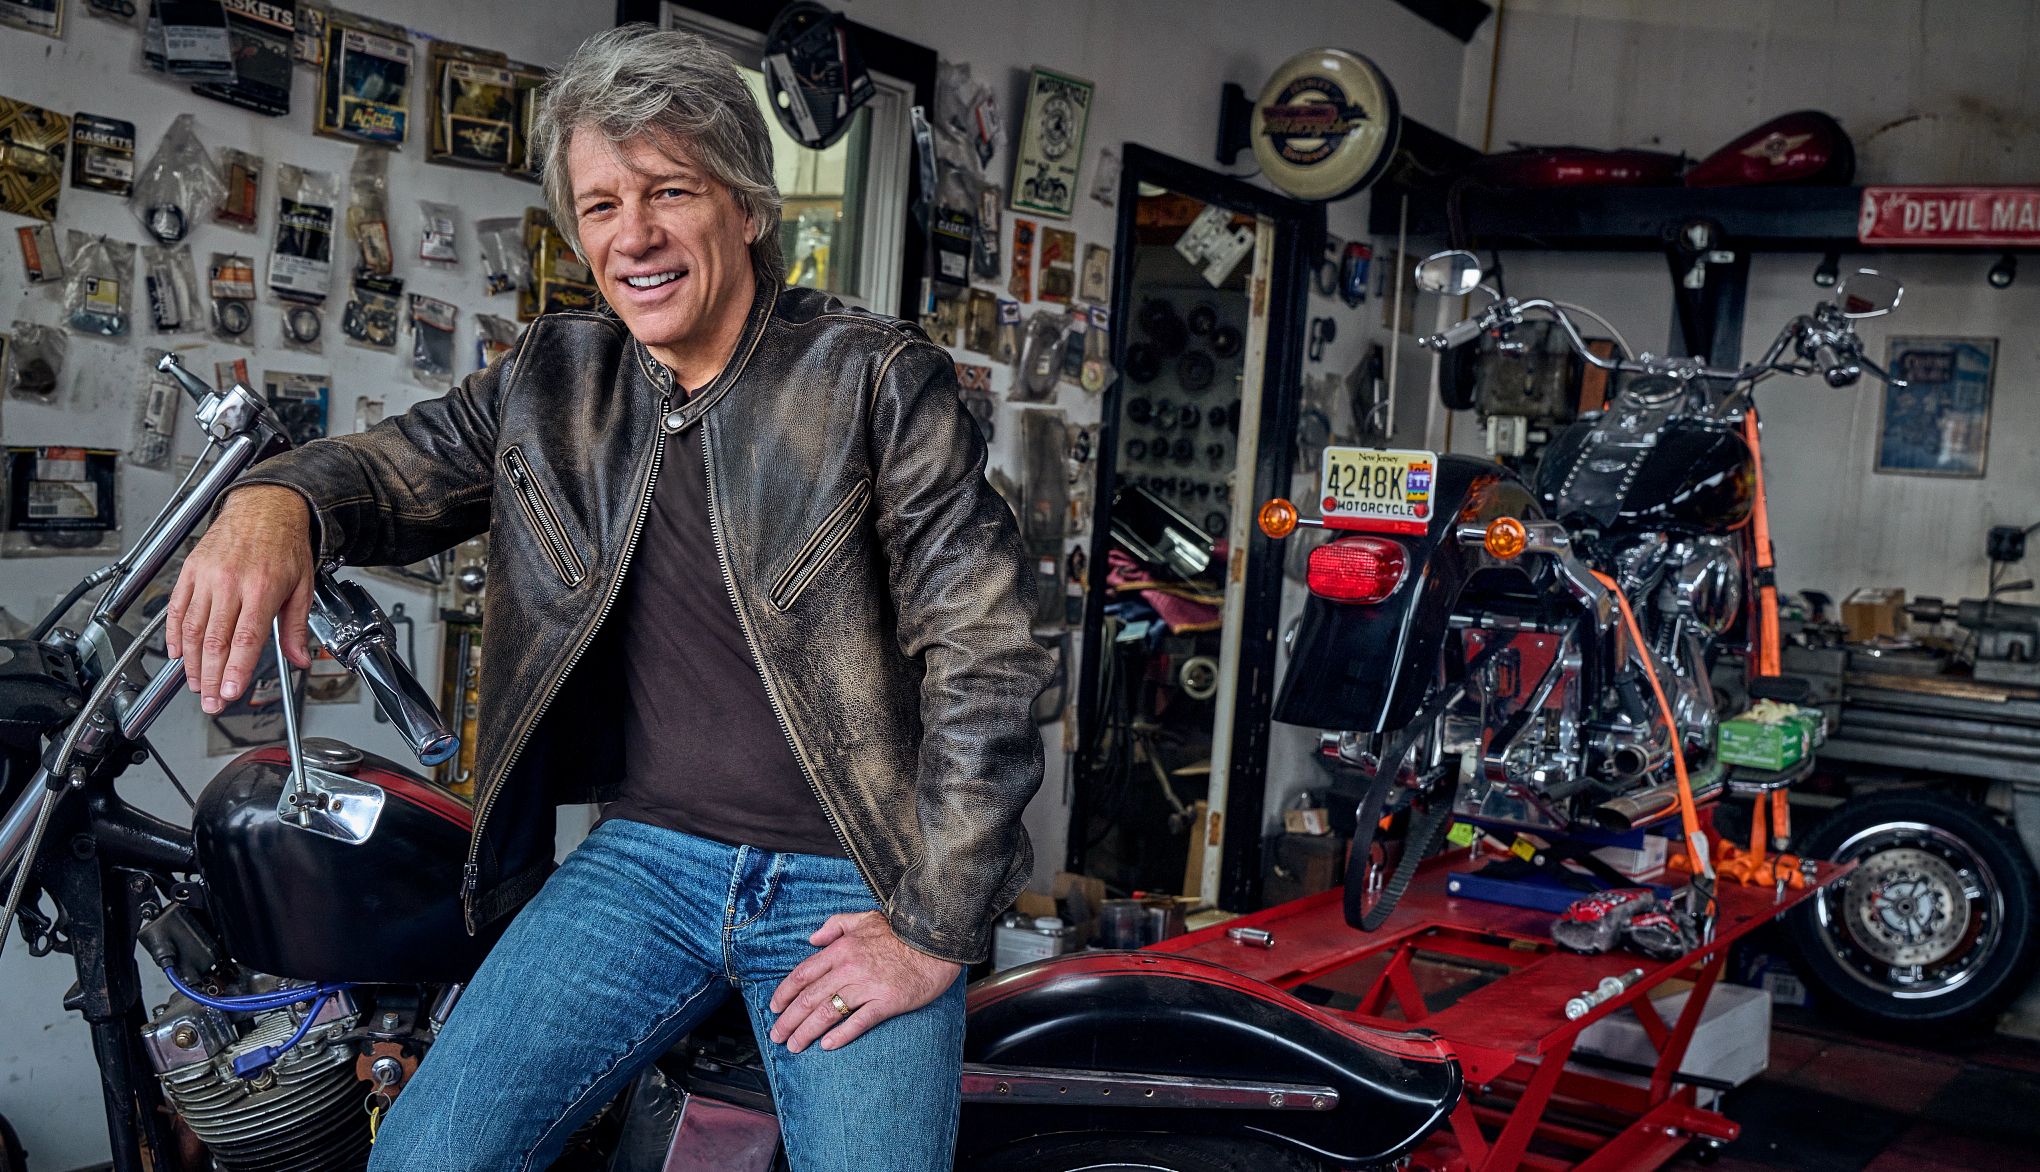 Jon Bon Jovi sitting on a motorcycle in a garage